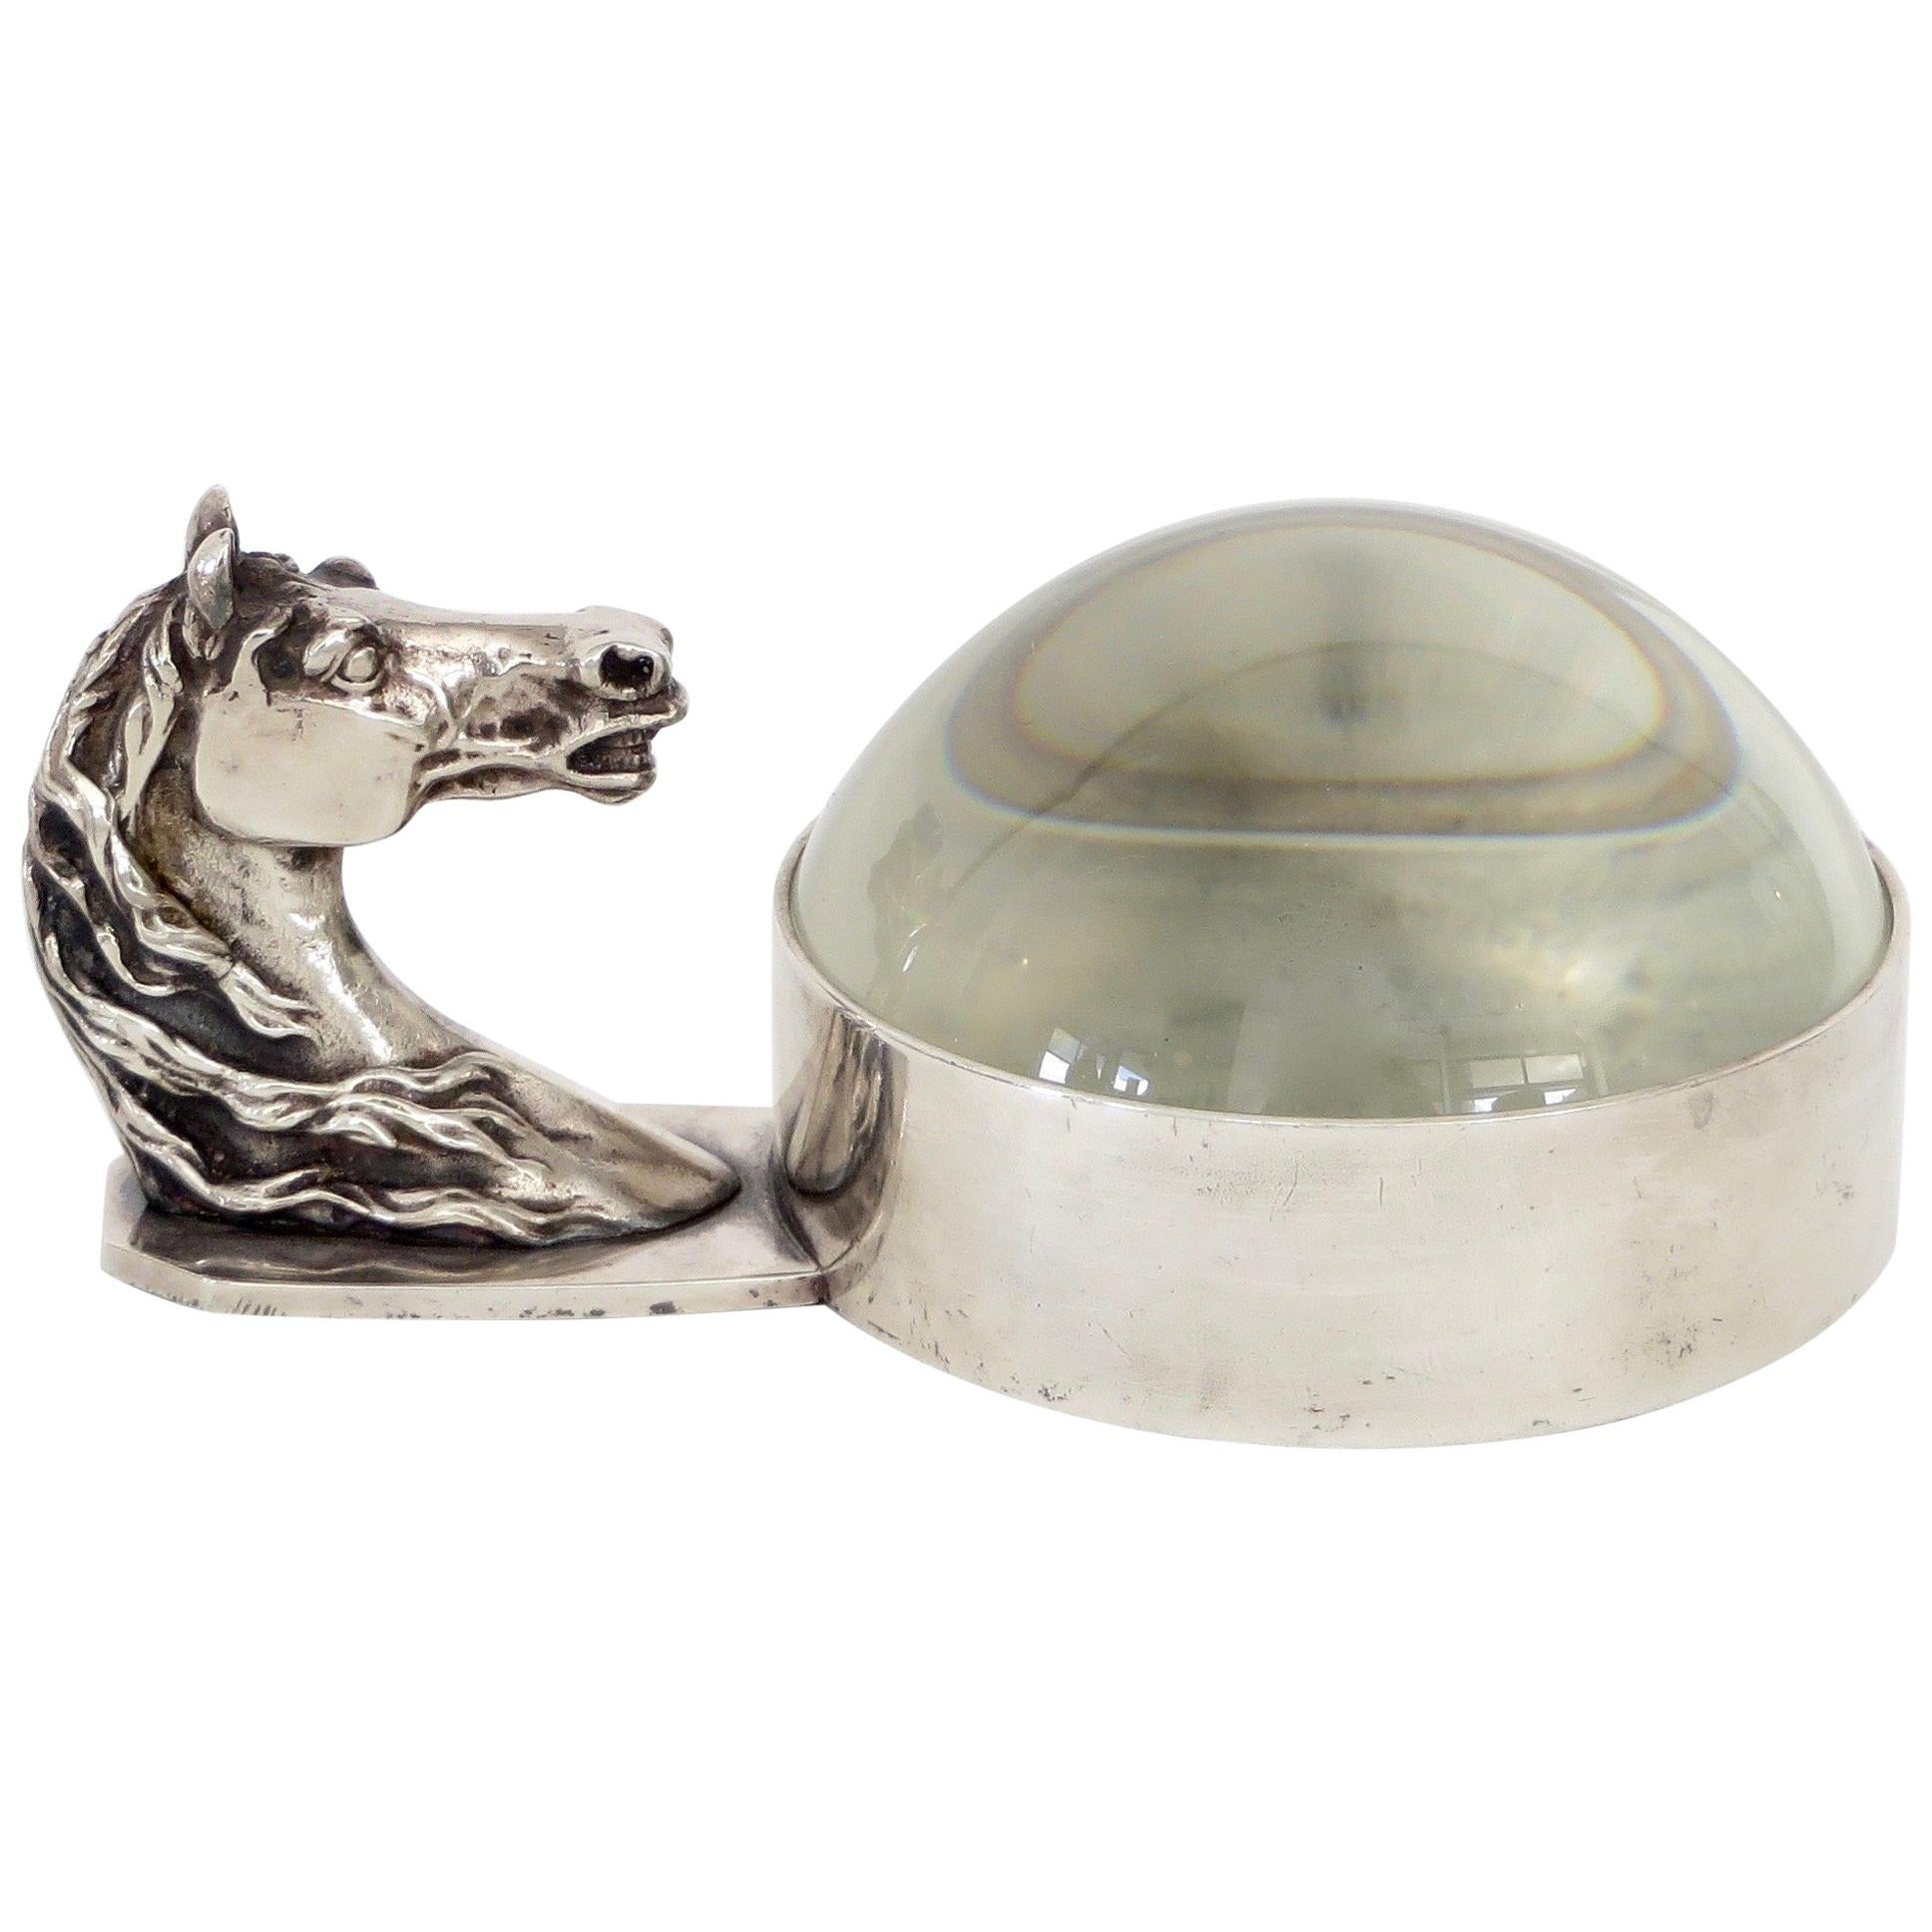 Hermes Silver Plate Equestrian Desk Magnifier